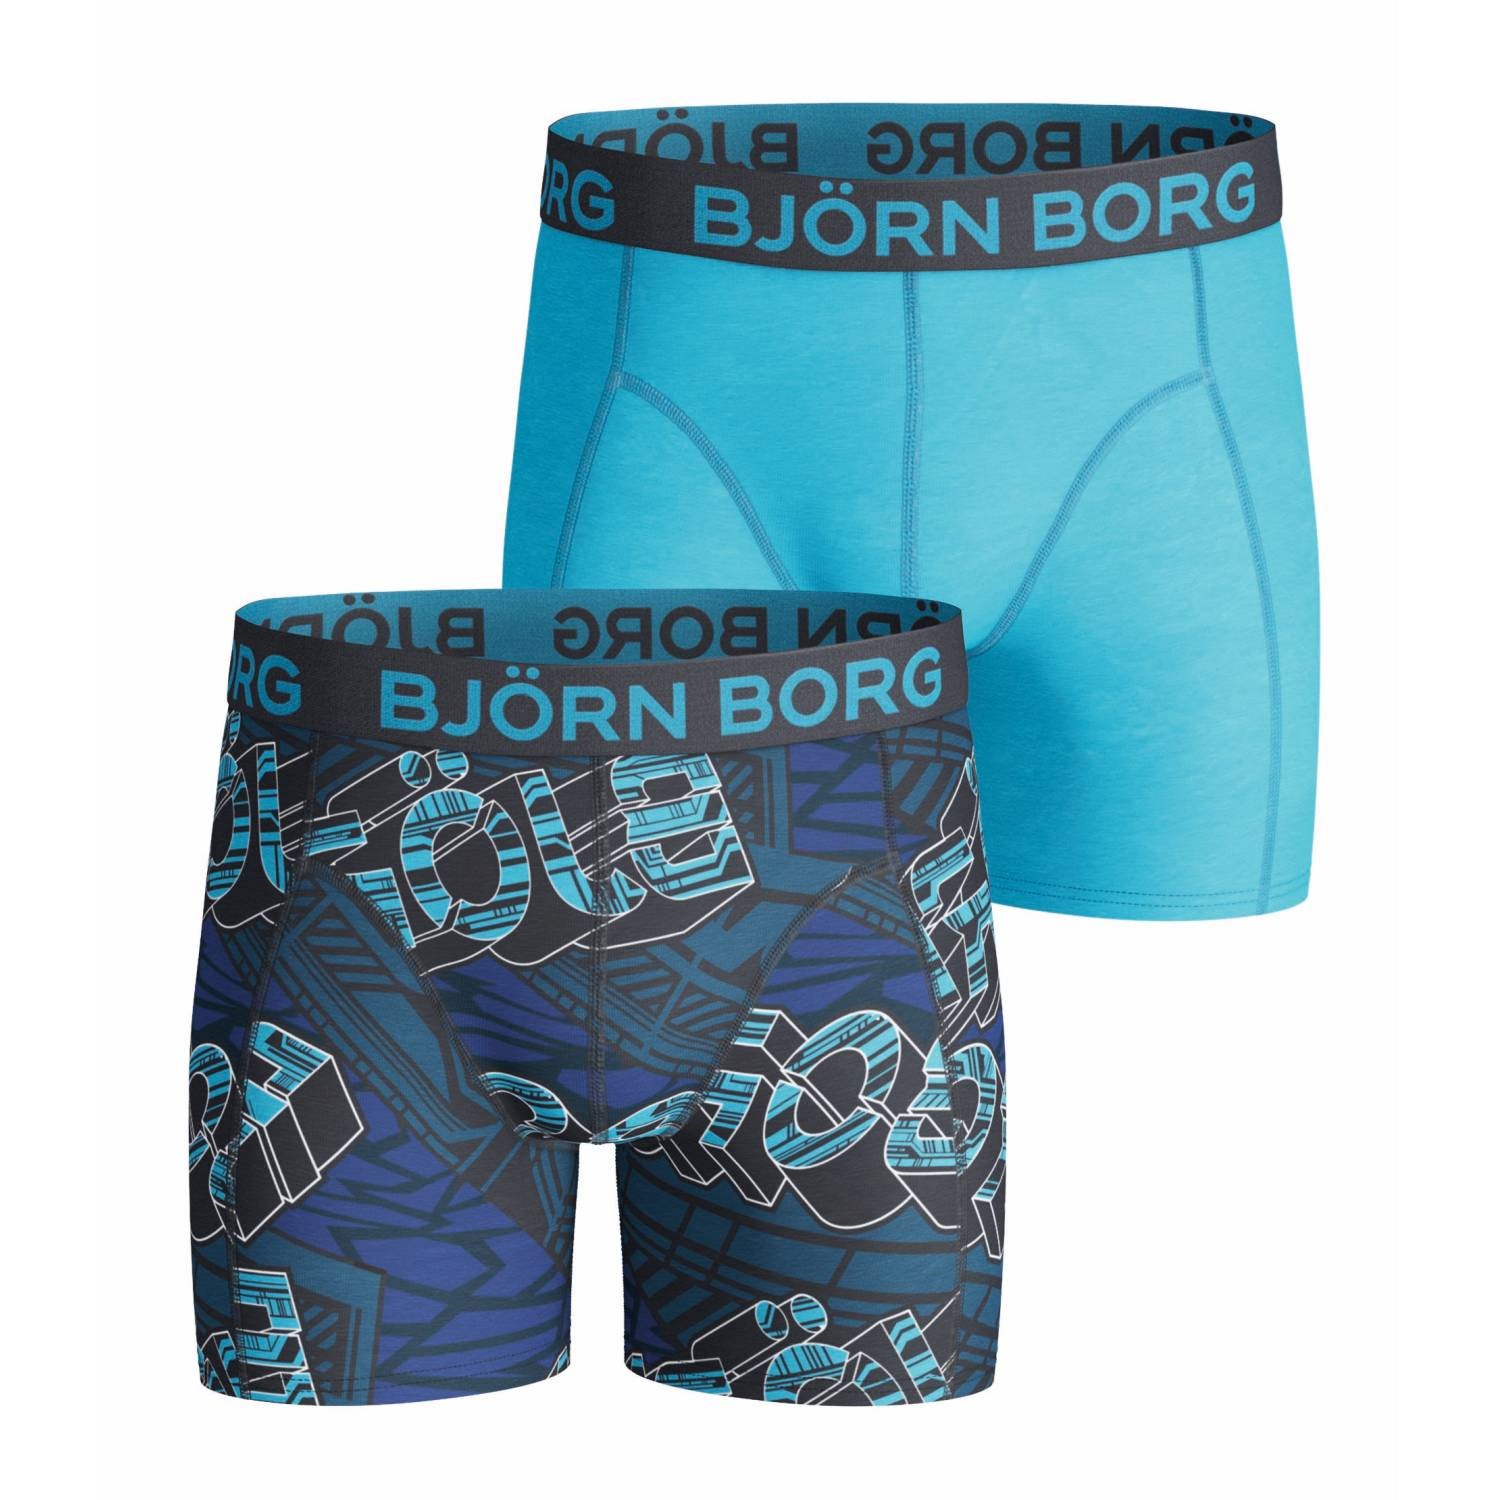 Björn Borg Identity Shorts For Boys 1402